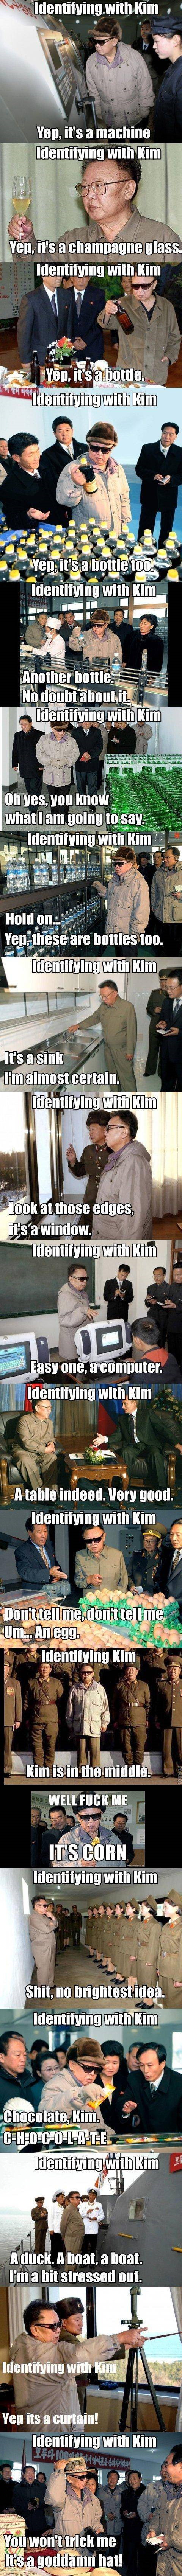 Identifying with Kim